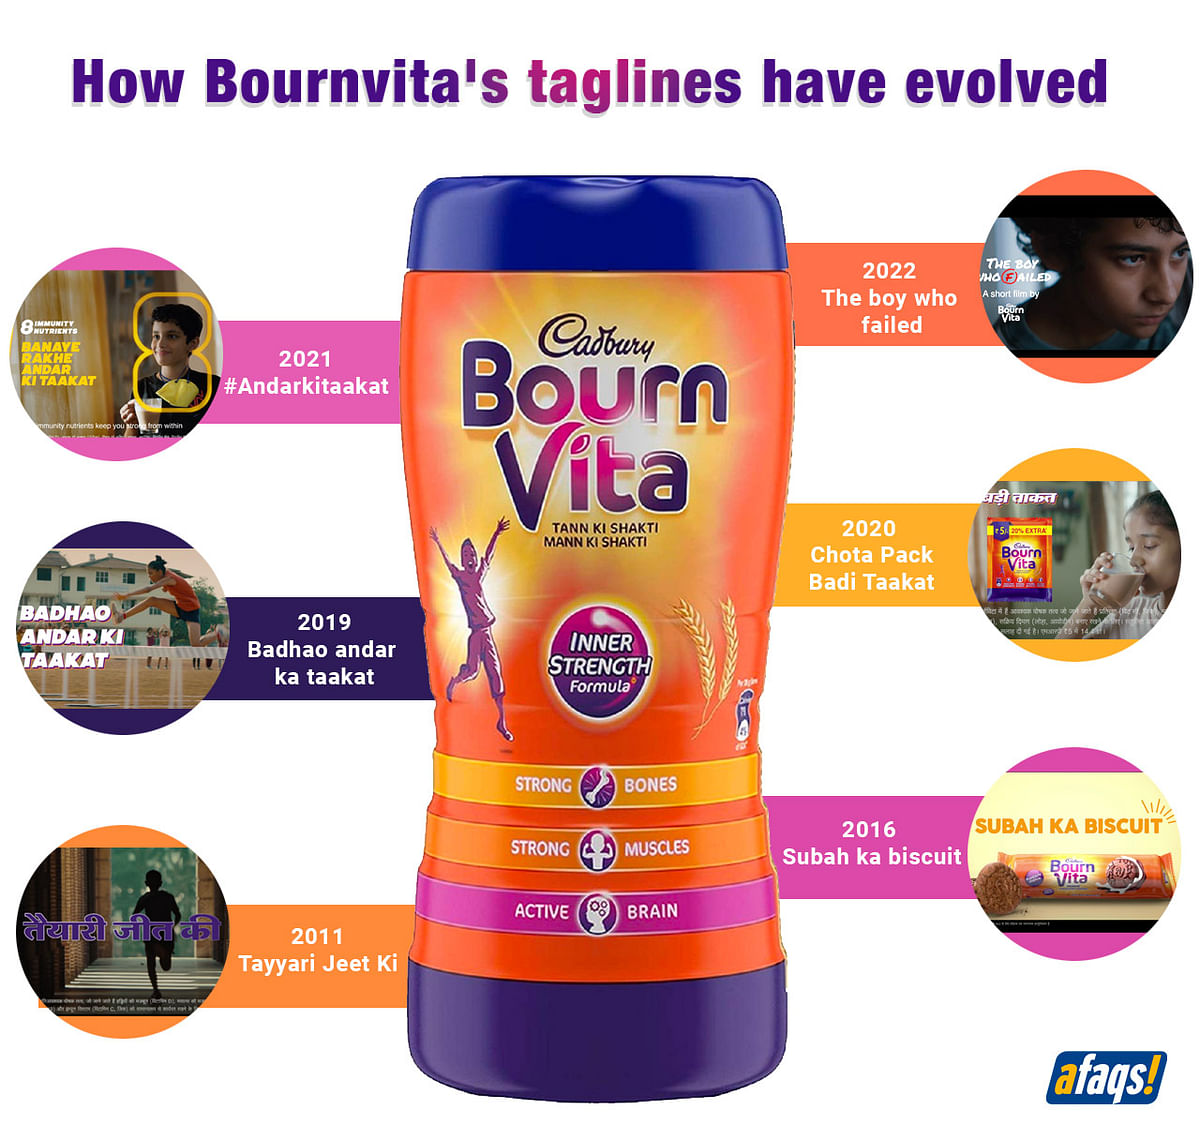 Evolution of Bournvita's messaging